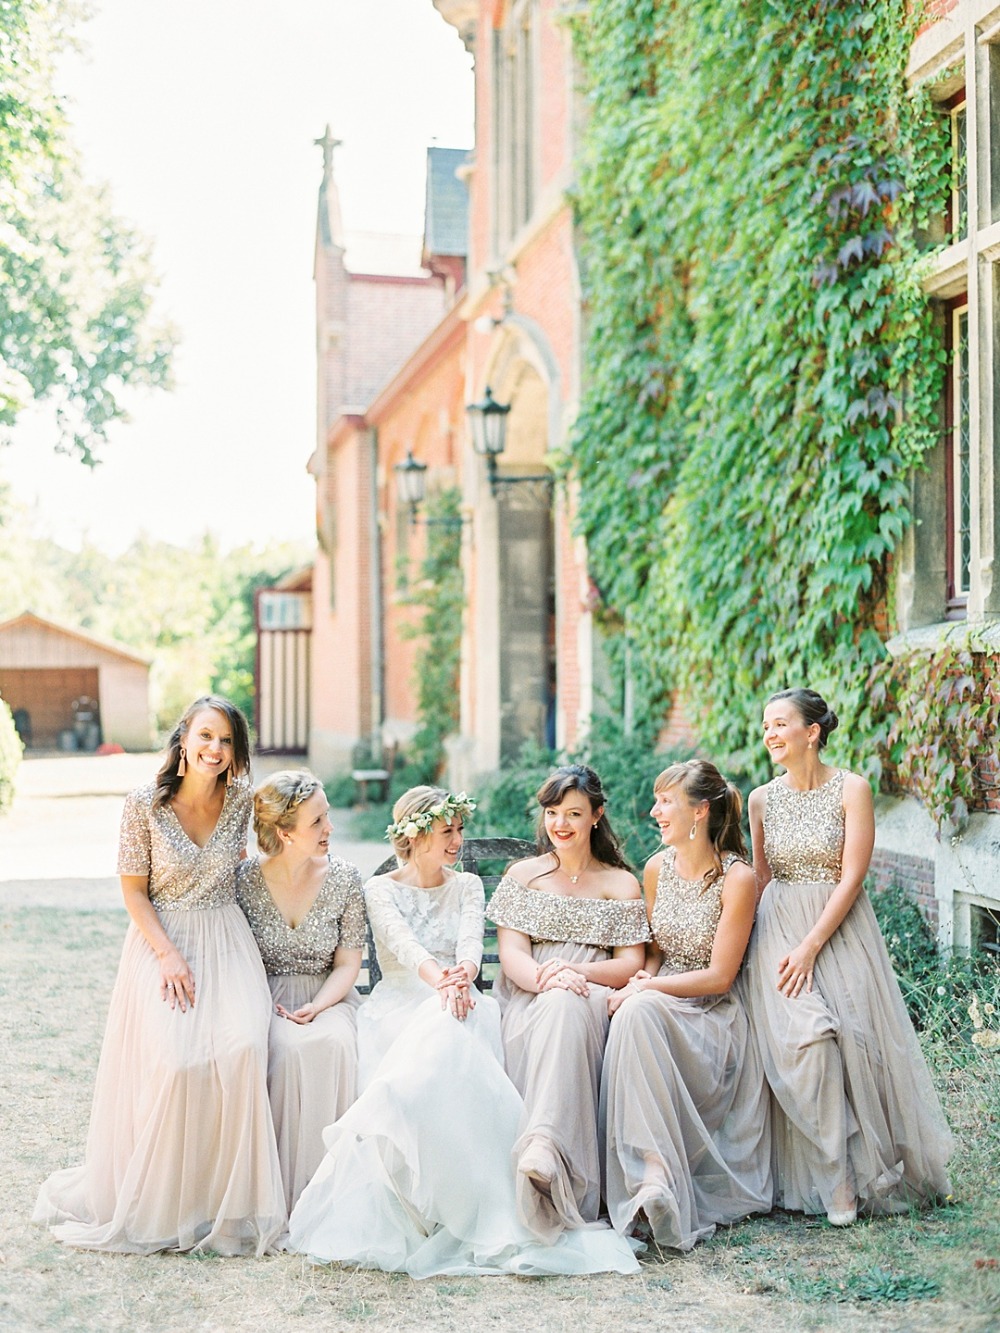 Sparkly bridesmaid dresses